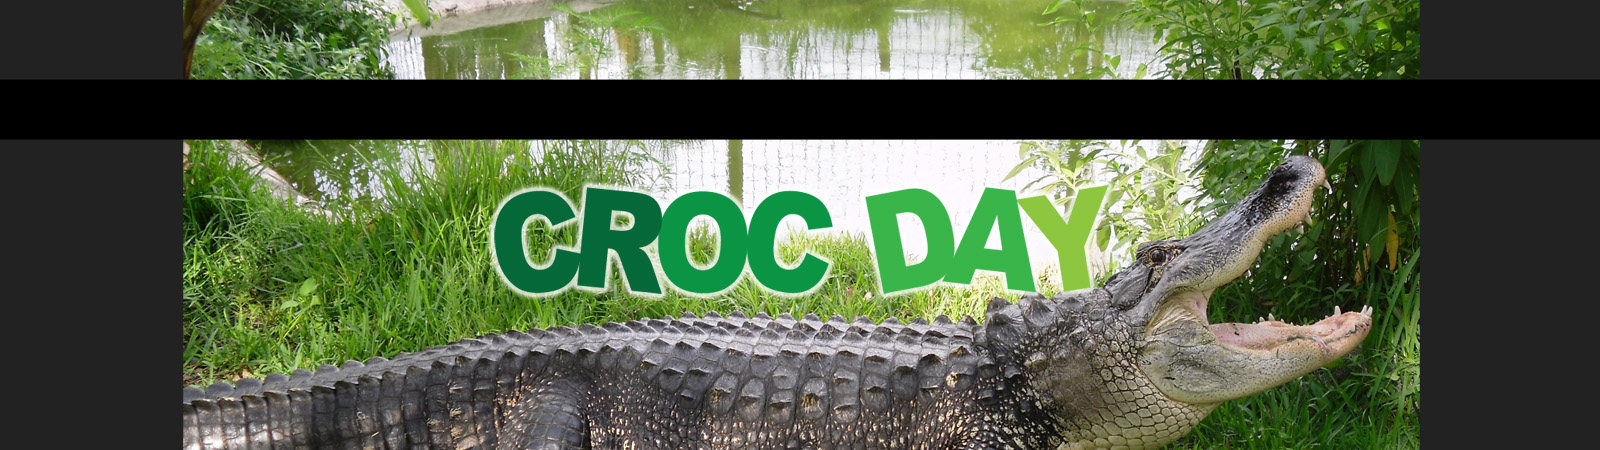 croc day